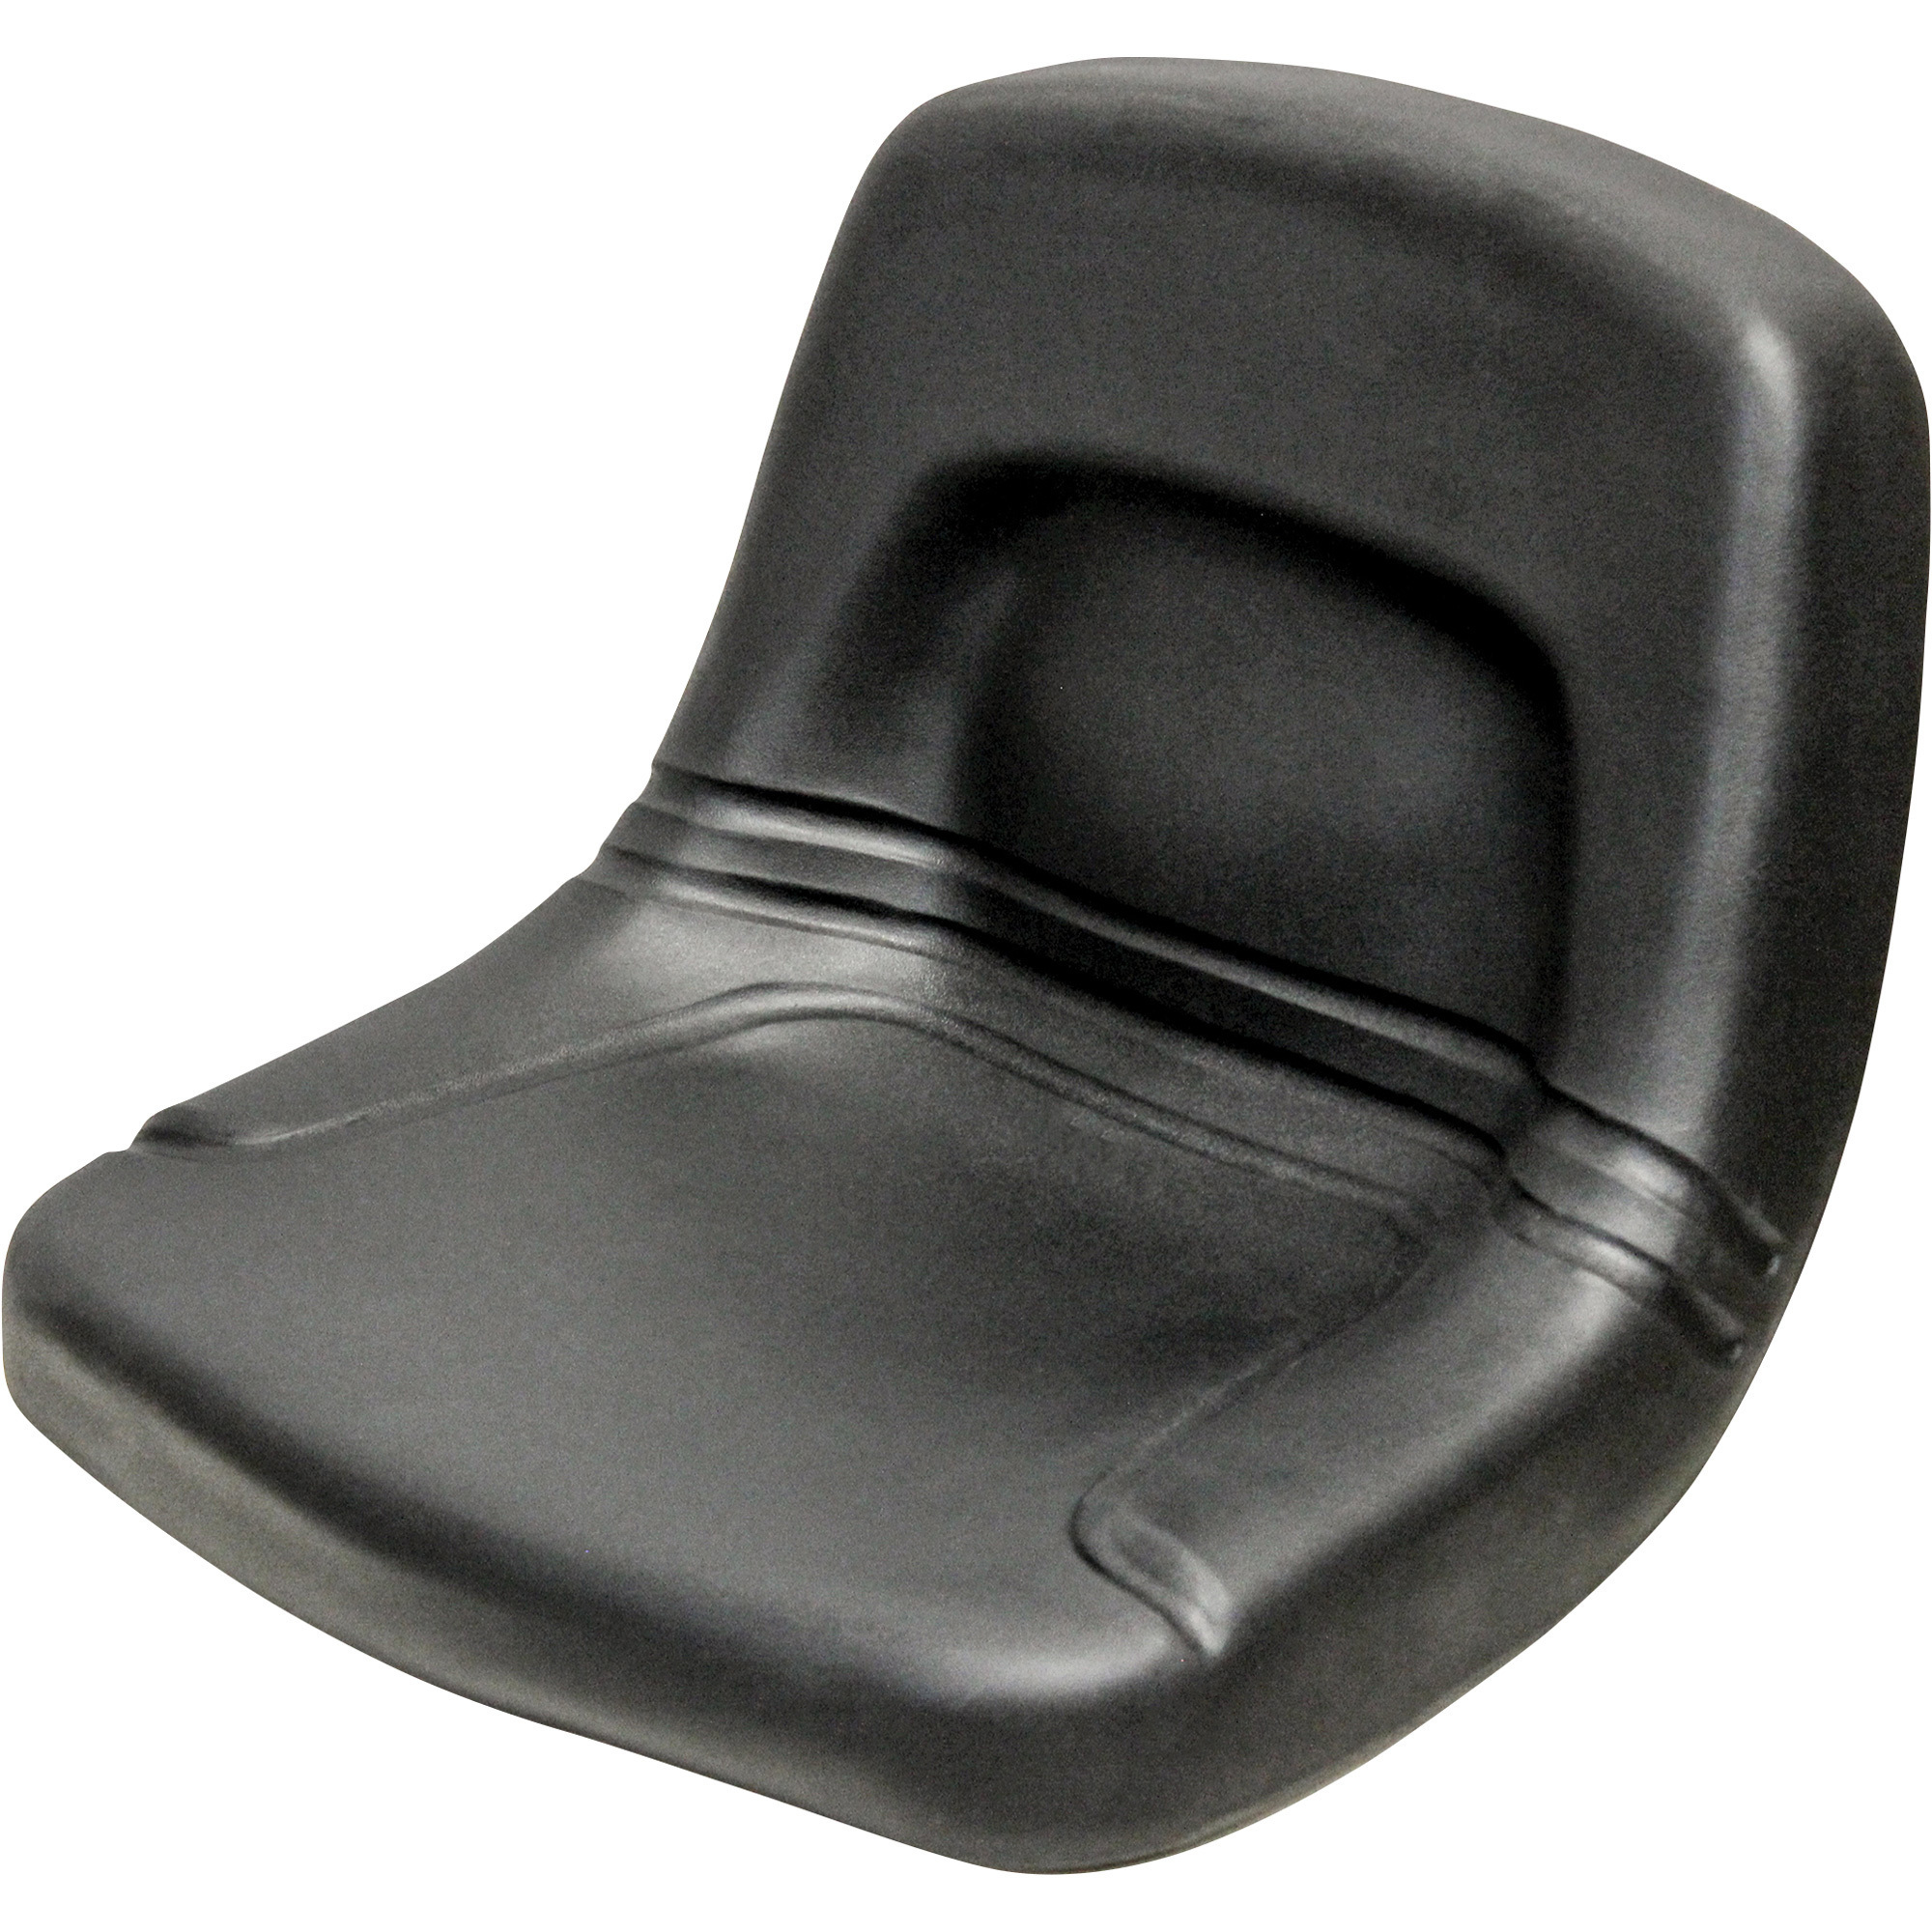 K&M Uni Pro KM 105 Bucket Seat, Black Vinyl, Model 8543